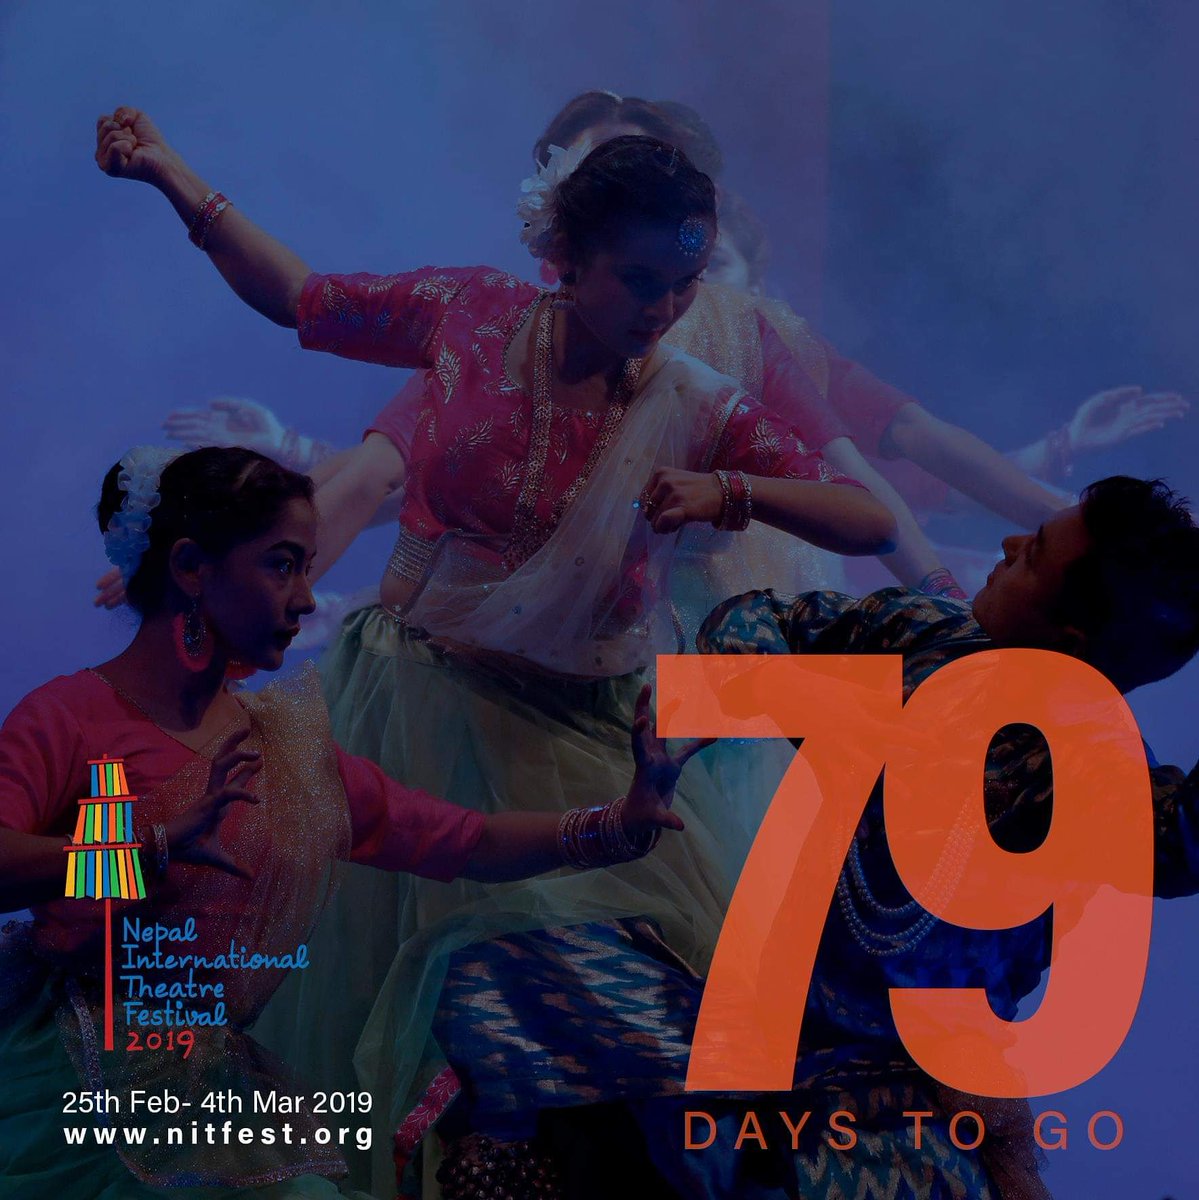 79 days to go!
Mark your dates for Nepal International Theatre Festival 2019!
#theatre #nepalinternationaltheatrefestival #playsinnepal #theatrenepal #theatrefestival #kathmandu #nepal